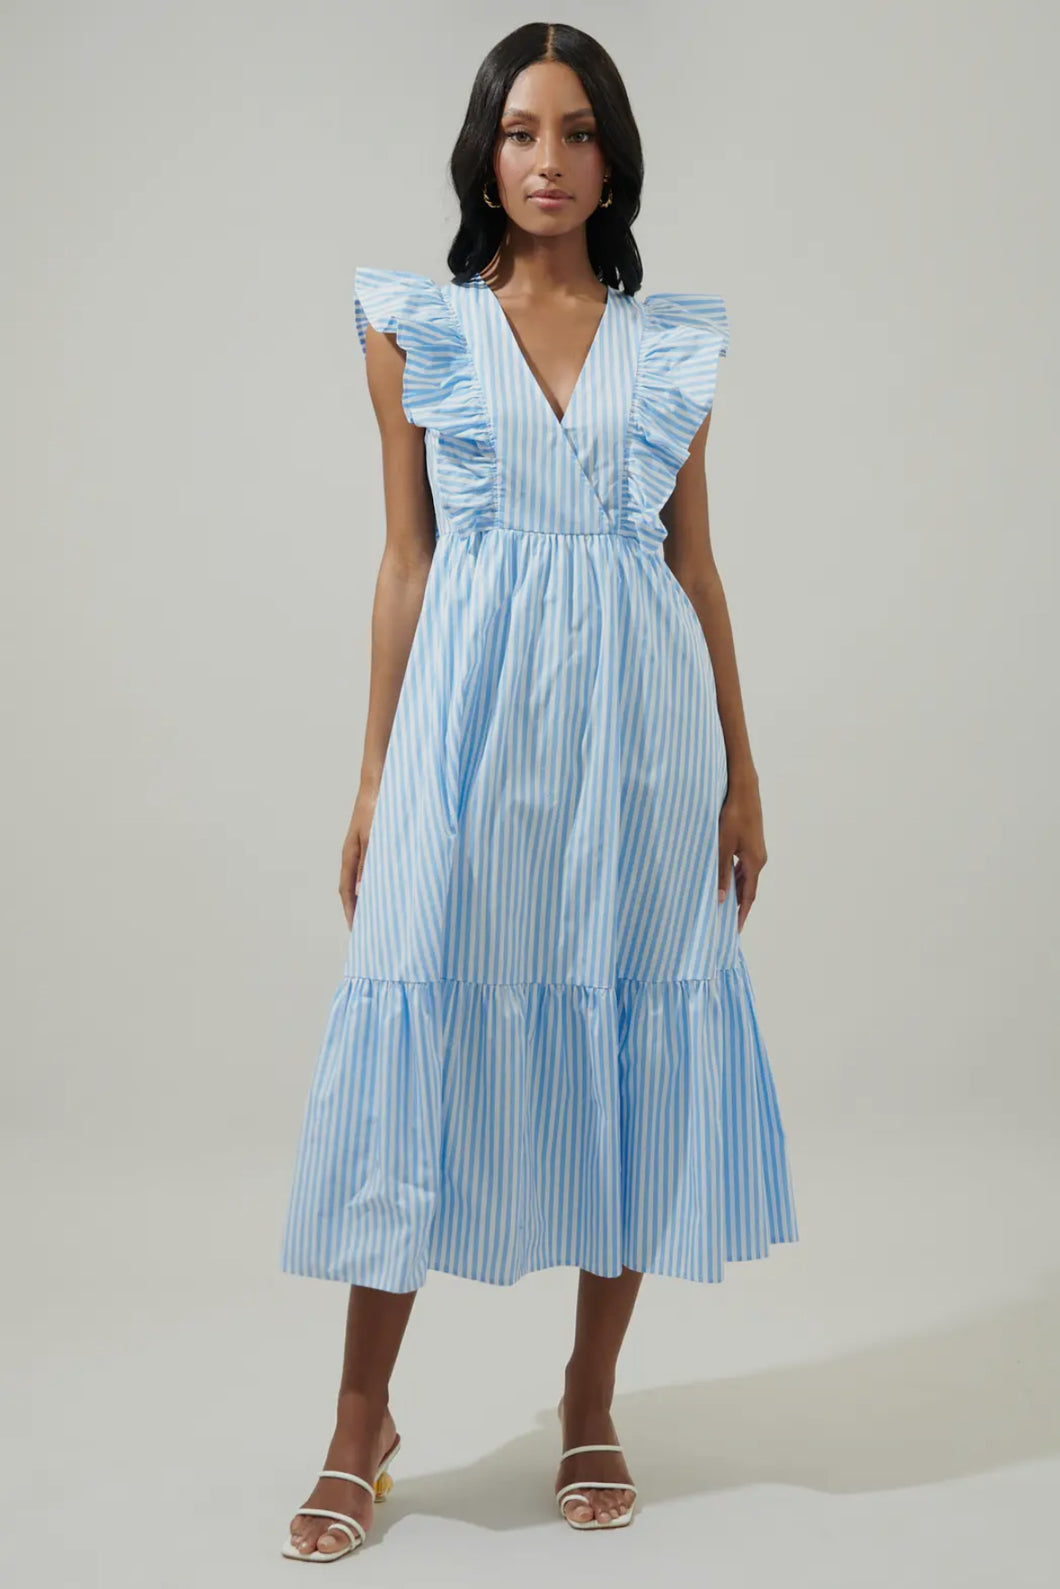 The Sayleigh Stripe Dress